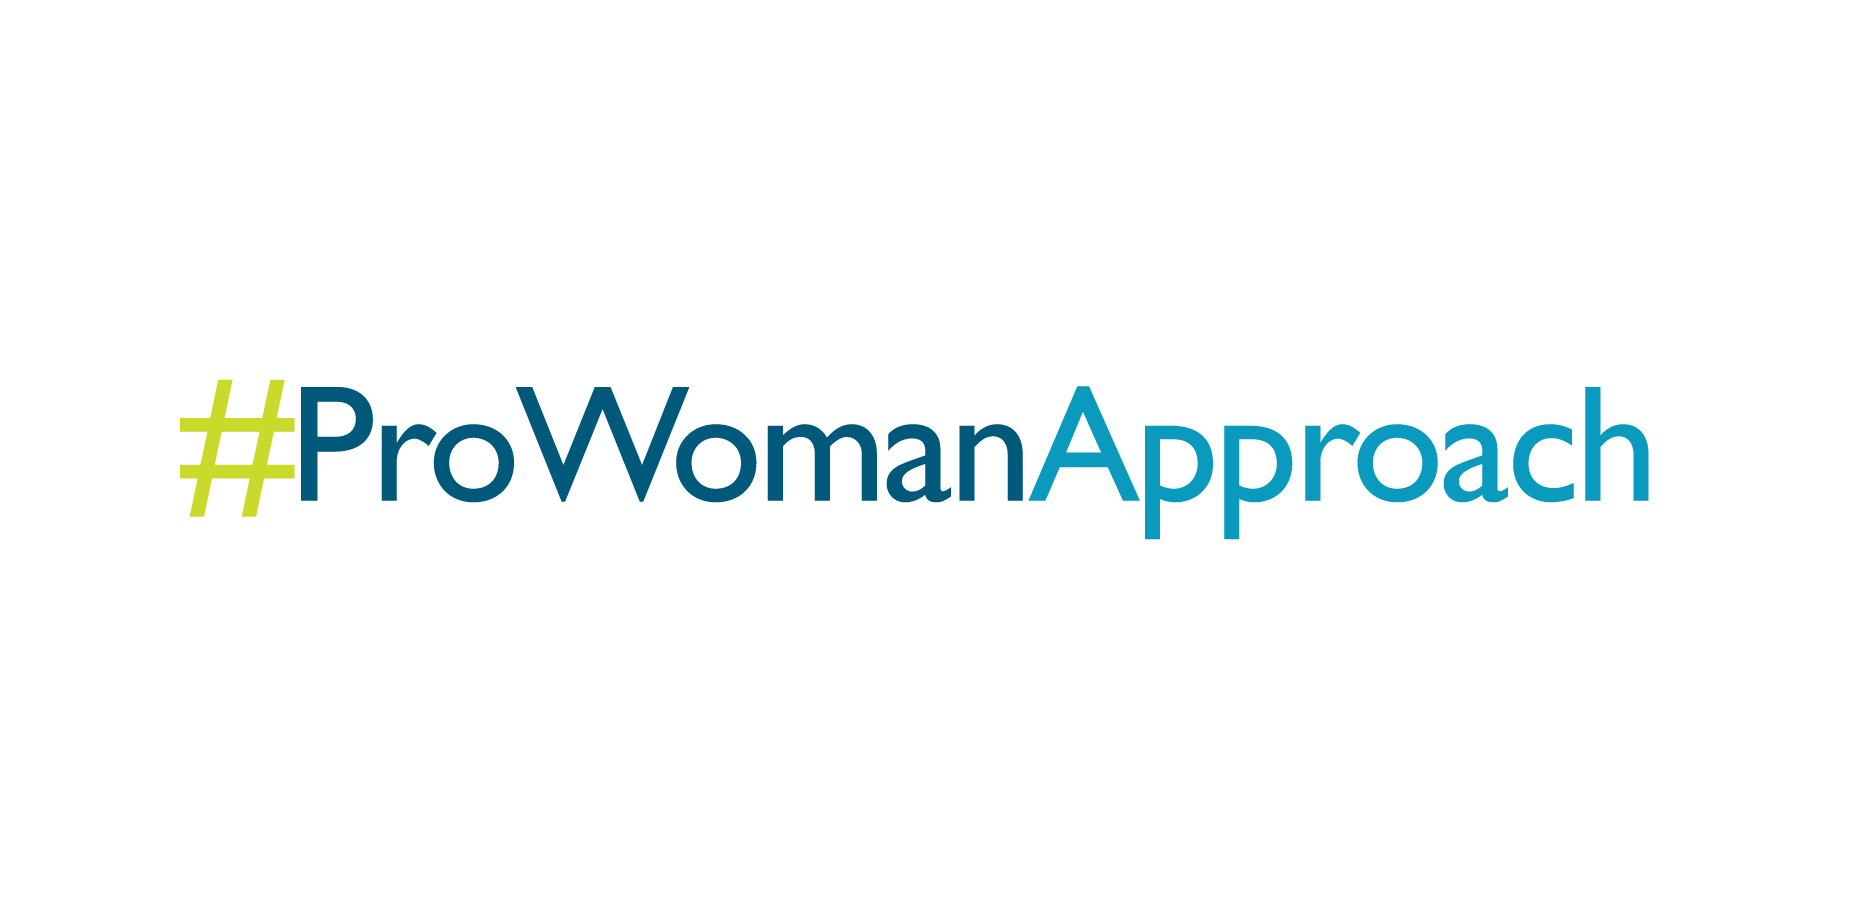 prowomanapproach logo